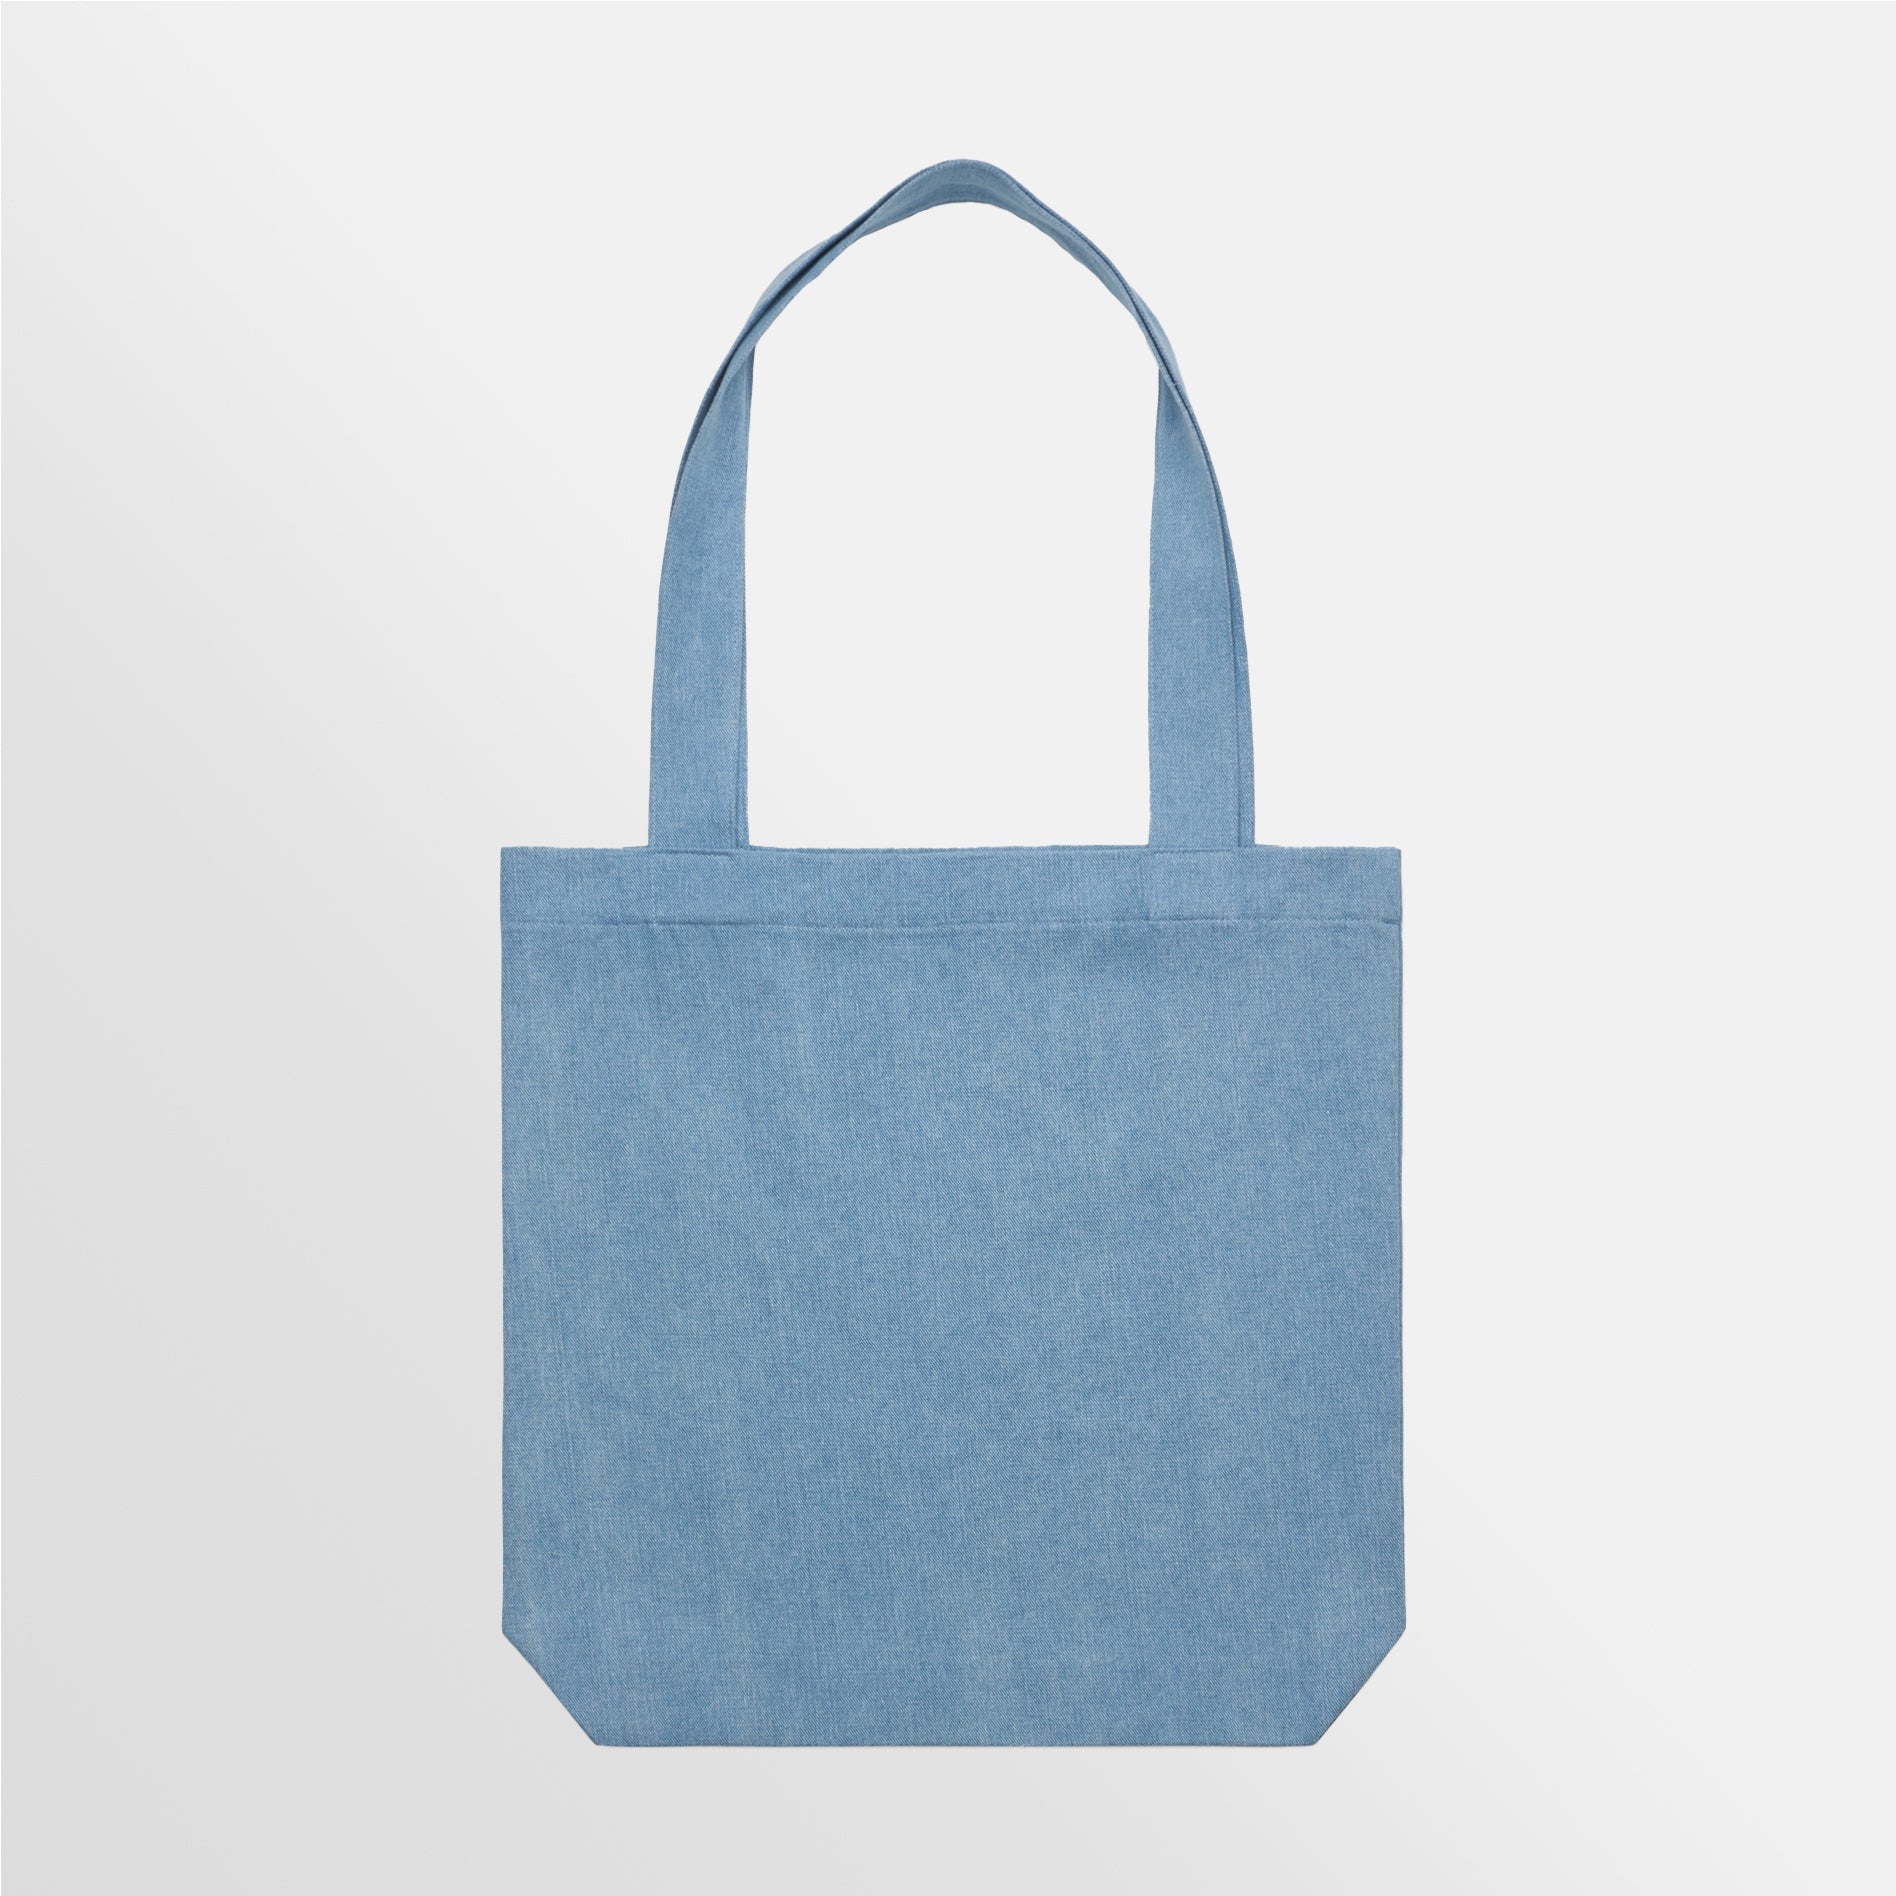 Blue RENAISSANCE print 001 Tote Bag by Didakdc